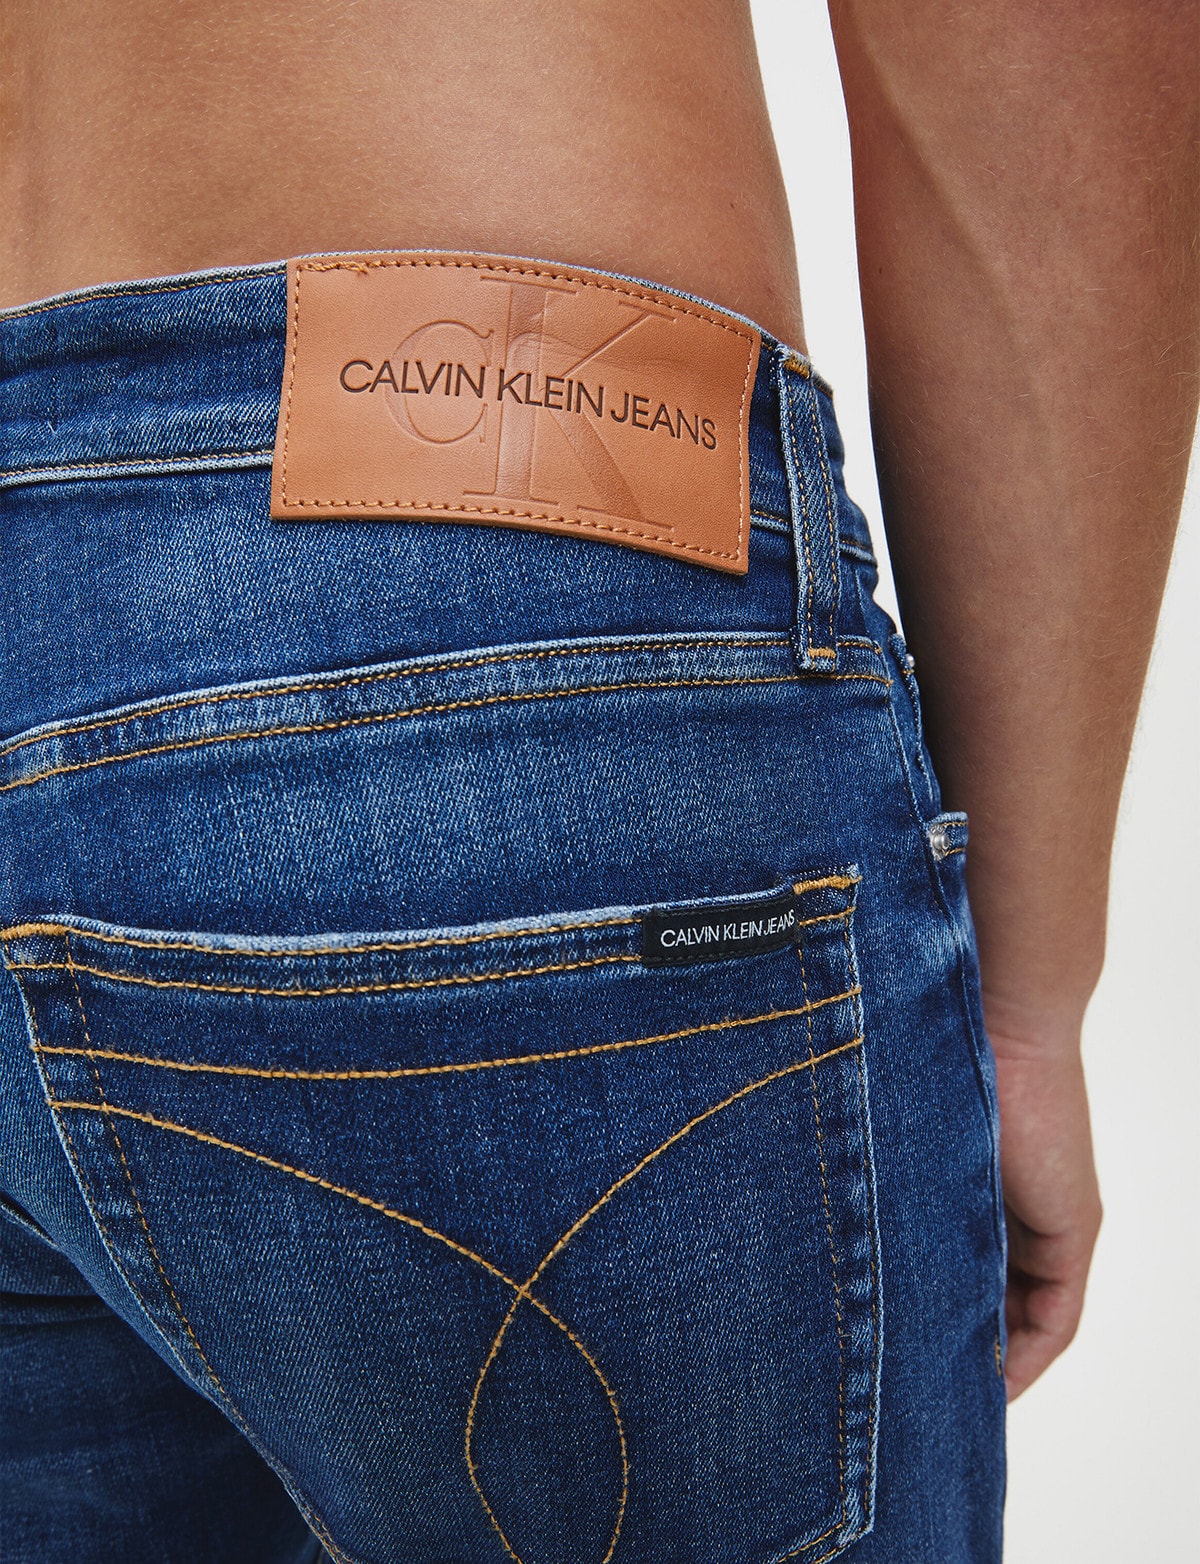 Calvin Klein 026 Slim Jean, Mid-Blue - Jeans